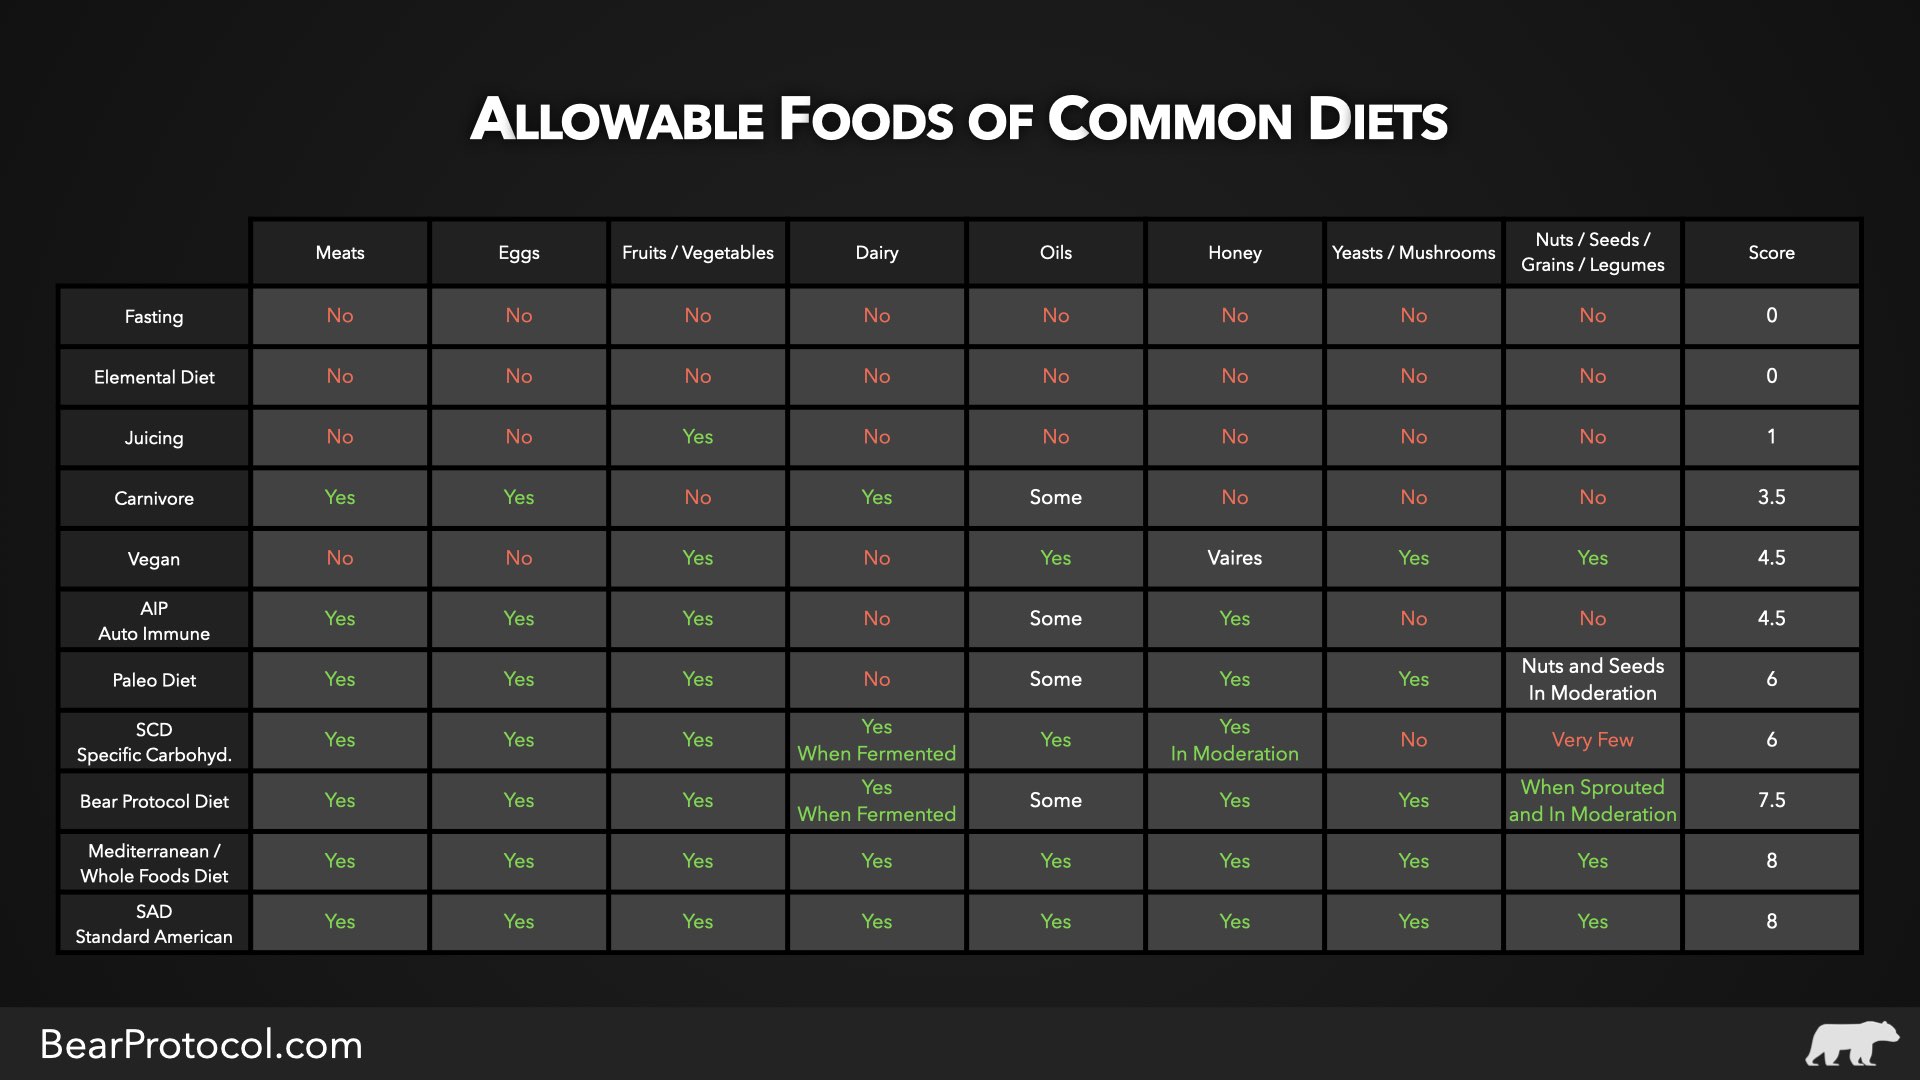 Allowable foods for paleo, mediterranean, SCD, AIP, elemental, vegan and carnivore diets.